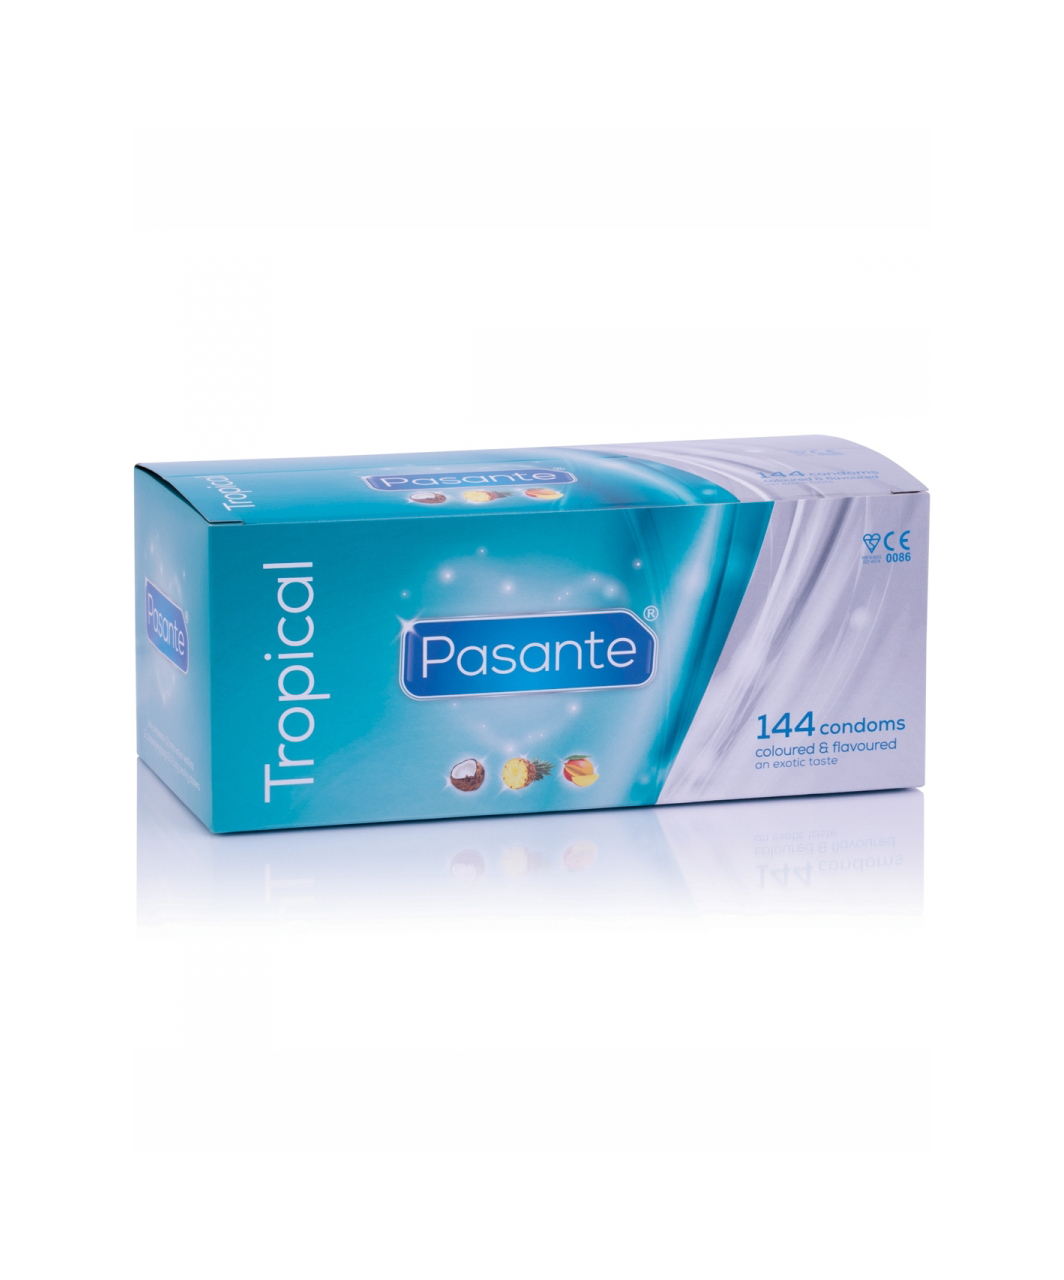 Pasante Tropical презервативы (144 шт.)